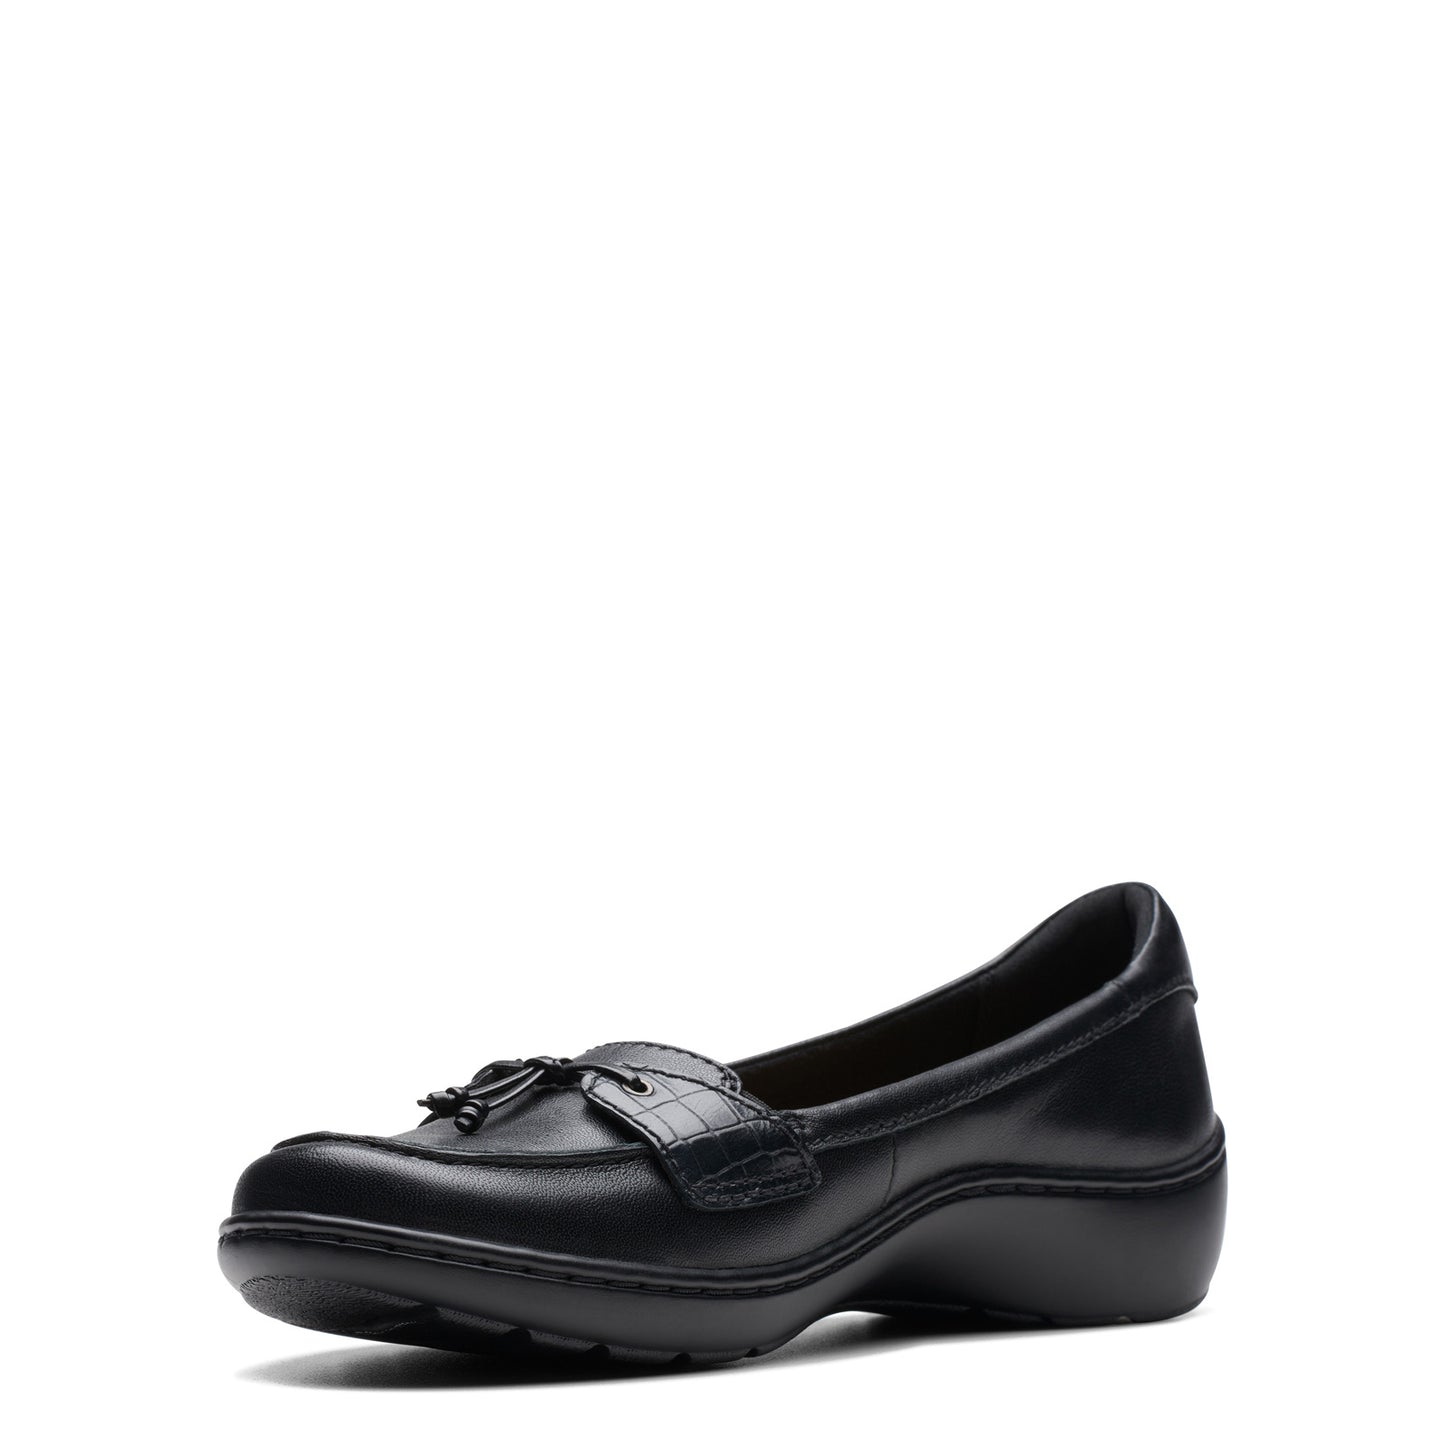 Peltz Shoes  Women's Clarks Cora Haley Slip-On BLACK 26174486